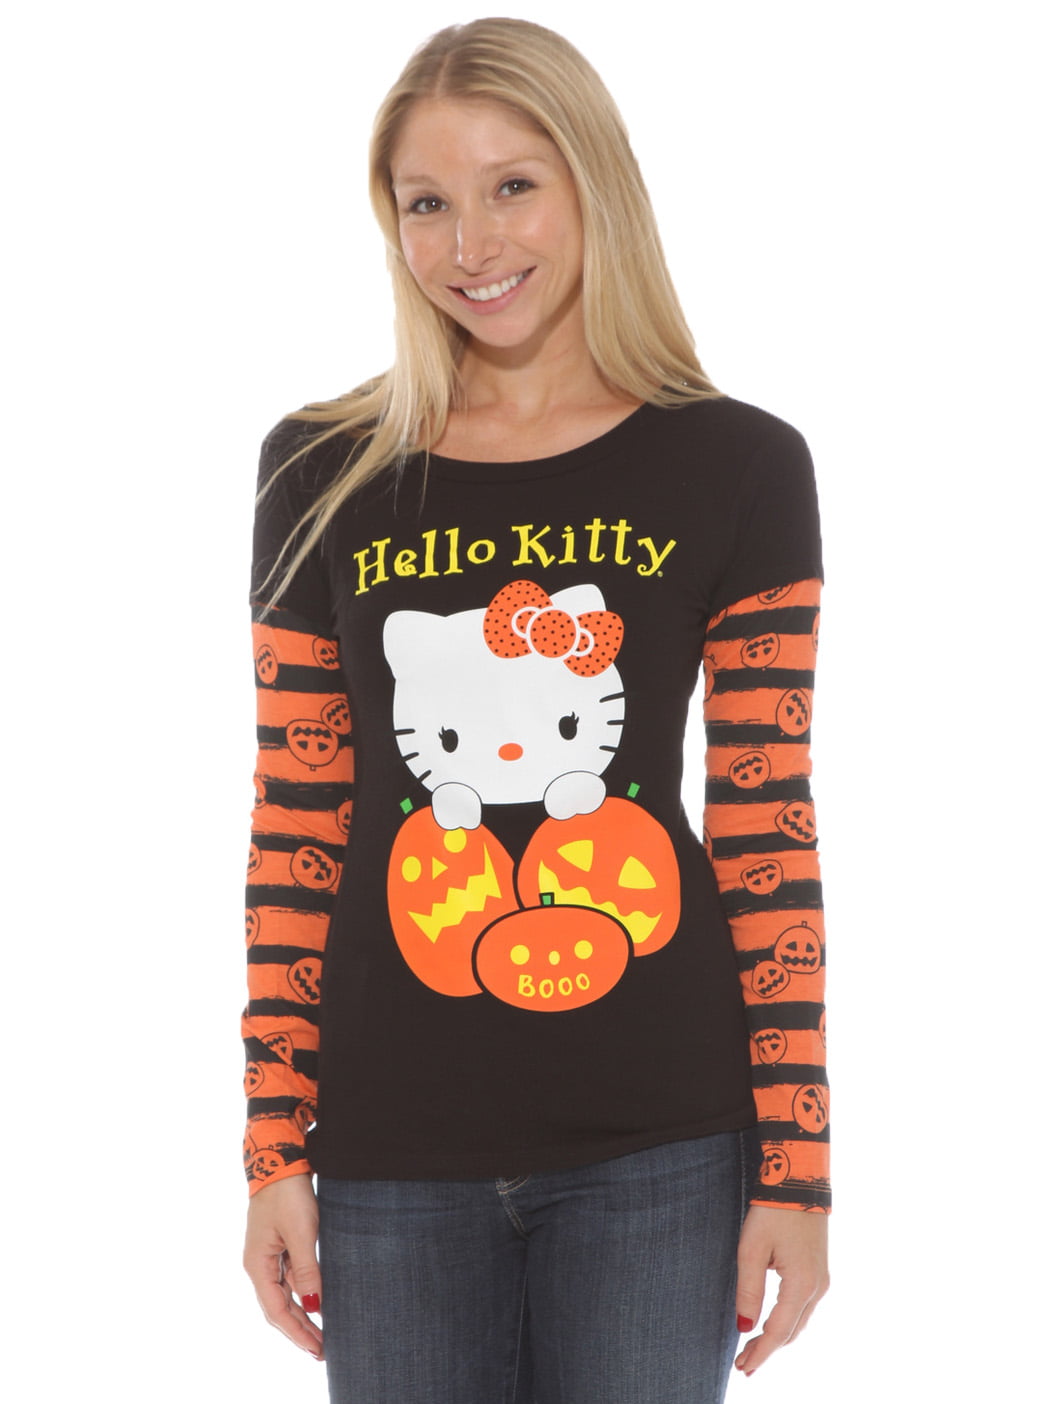 NWT Junior Womens Hello Kitty Layered Look Halloween Theme Shirt White Bats Cute